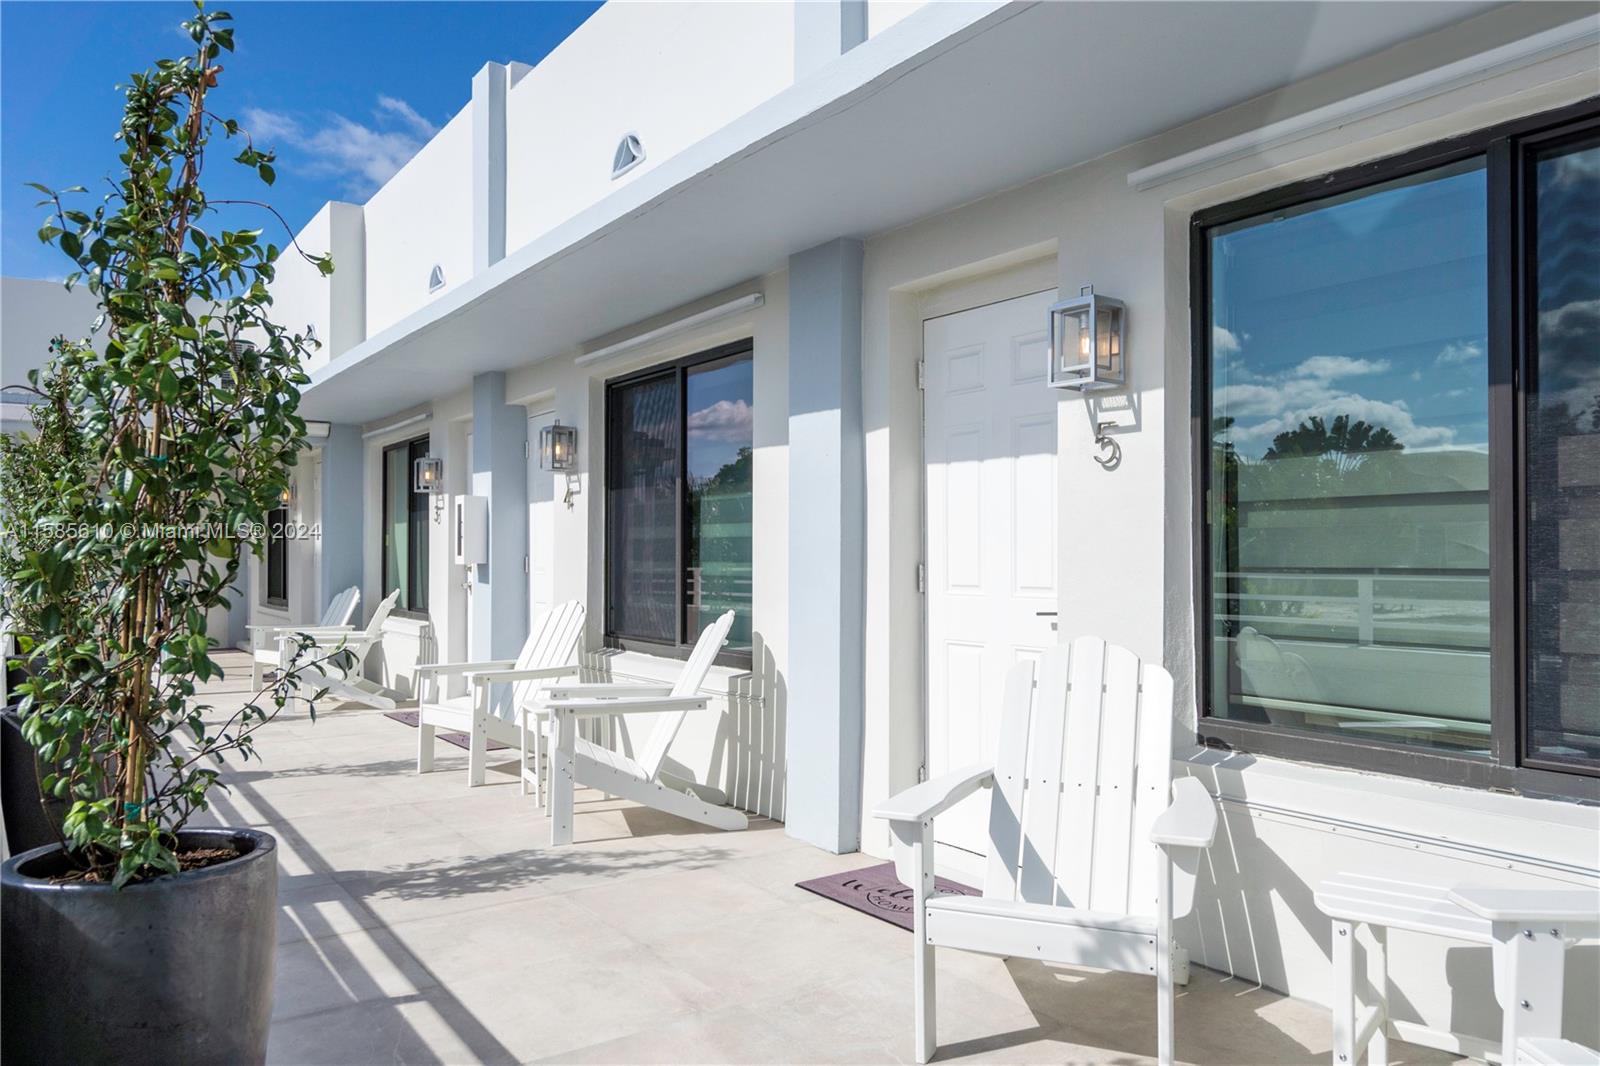 Rental Property at 1191 71st St St 1, Miami Beach, Miami-Dade County, Florida - Bedrooms: 2 
Bathrooms: 2  - $2,900 MO.